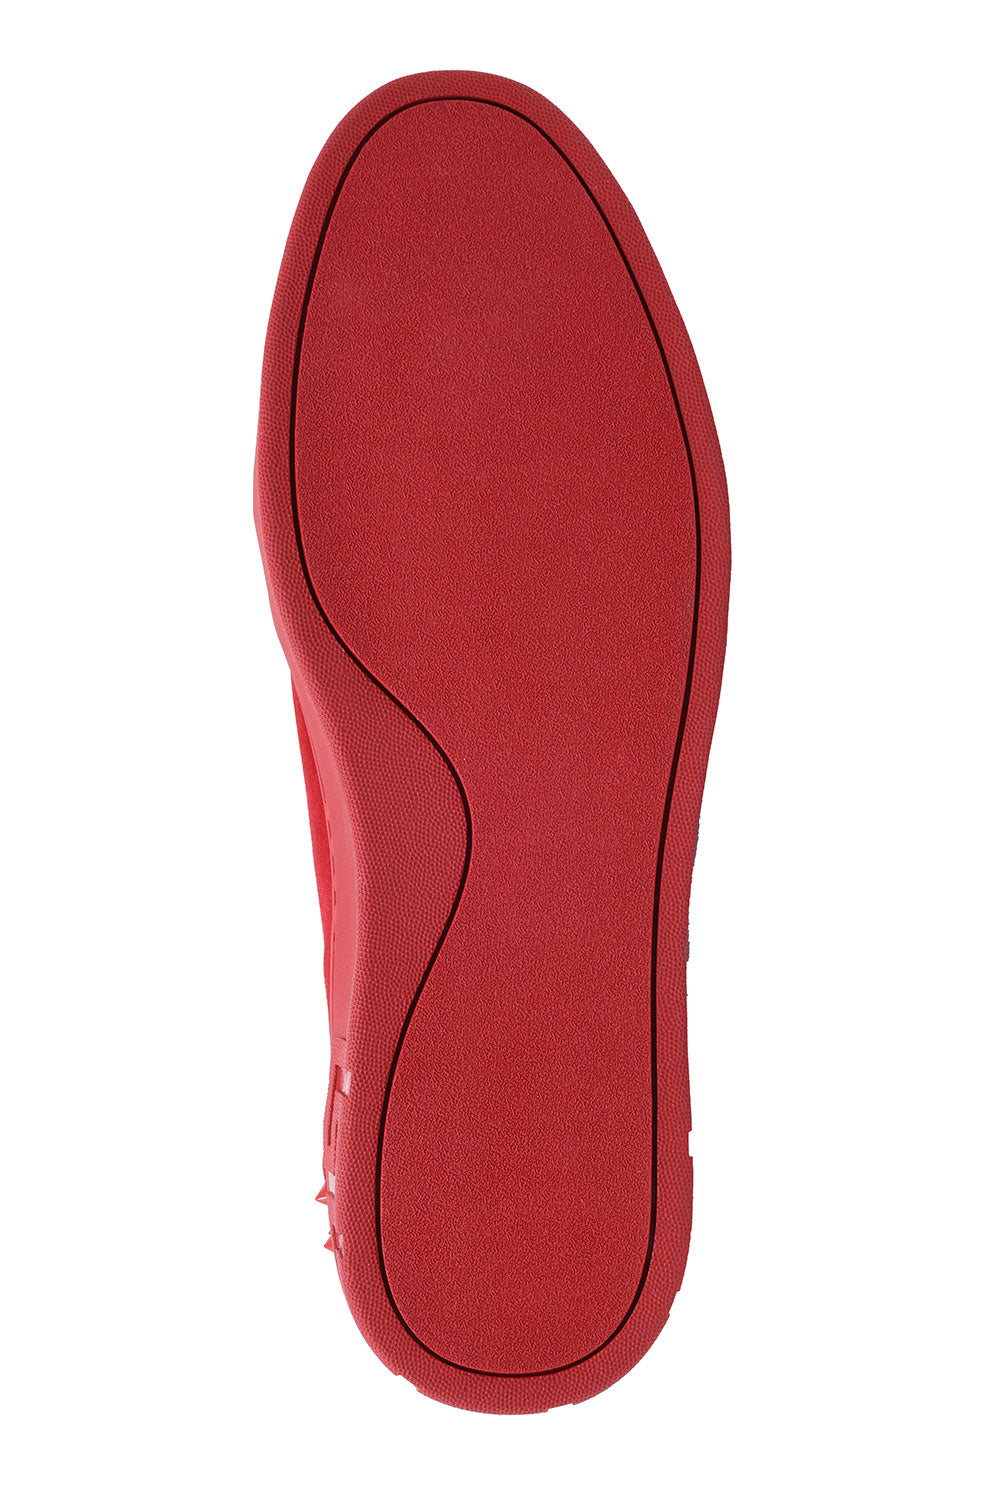 Barabas Men's Spike Design Luxury Suede High-Top Sneaker SH732 Red